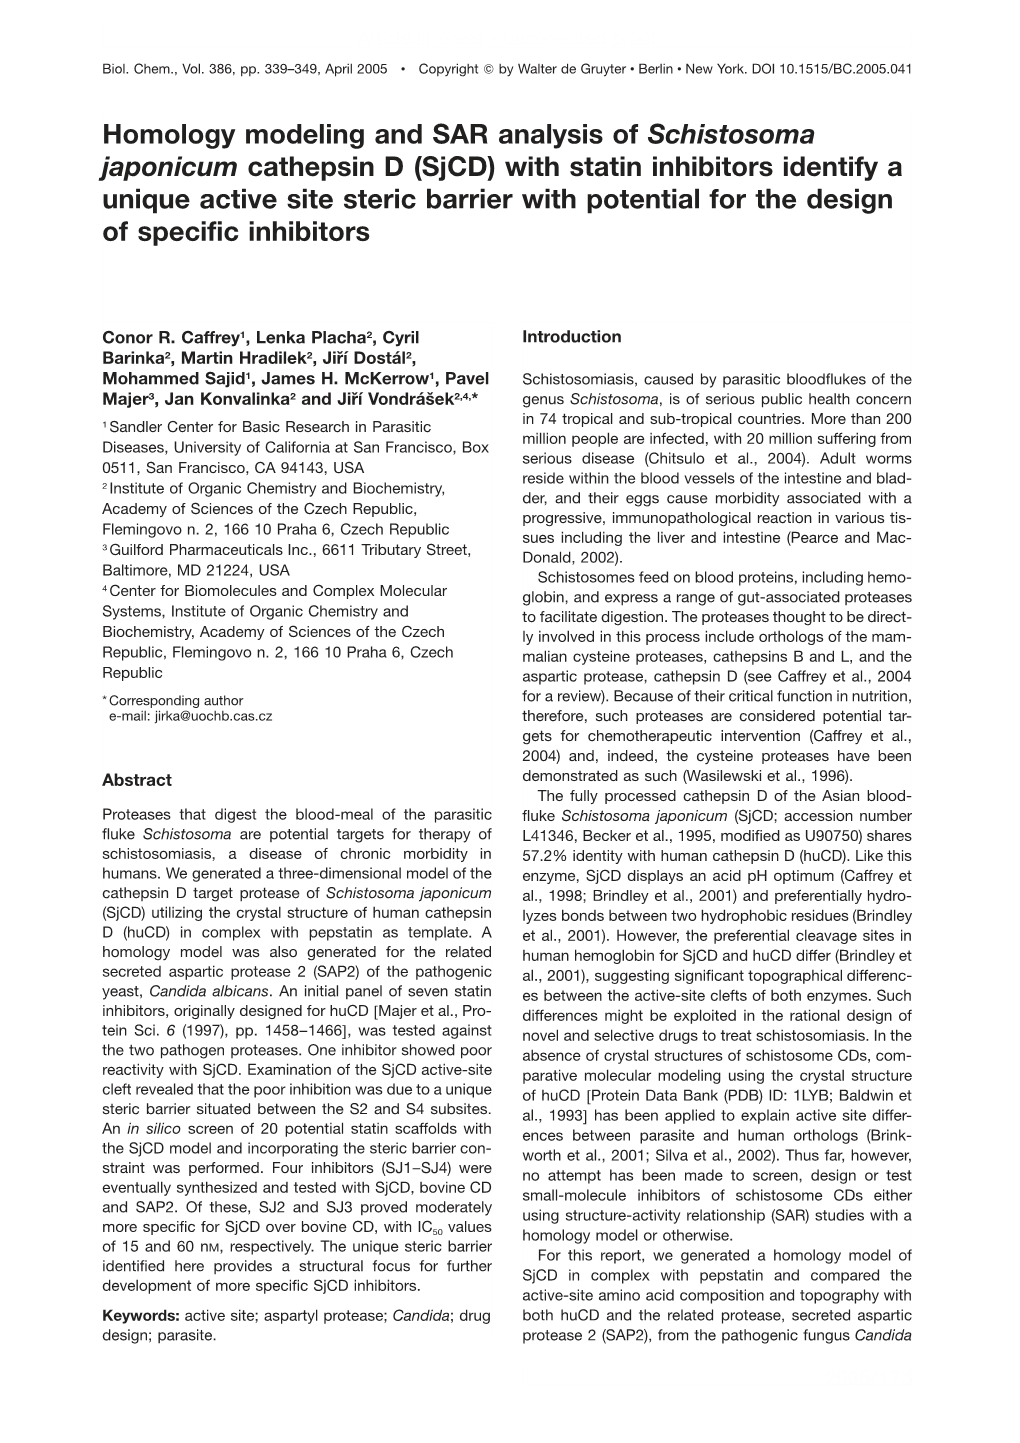 Homology Modeling and SAR Analysis of Schistosoma Japonicum